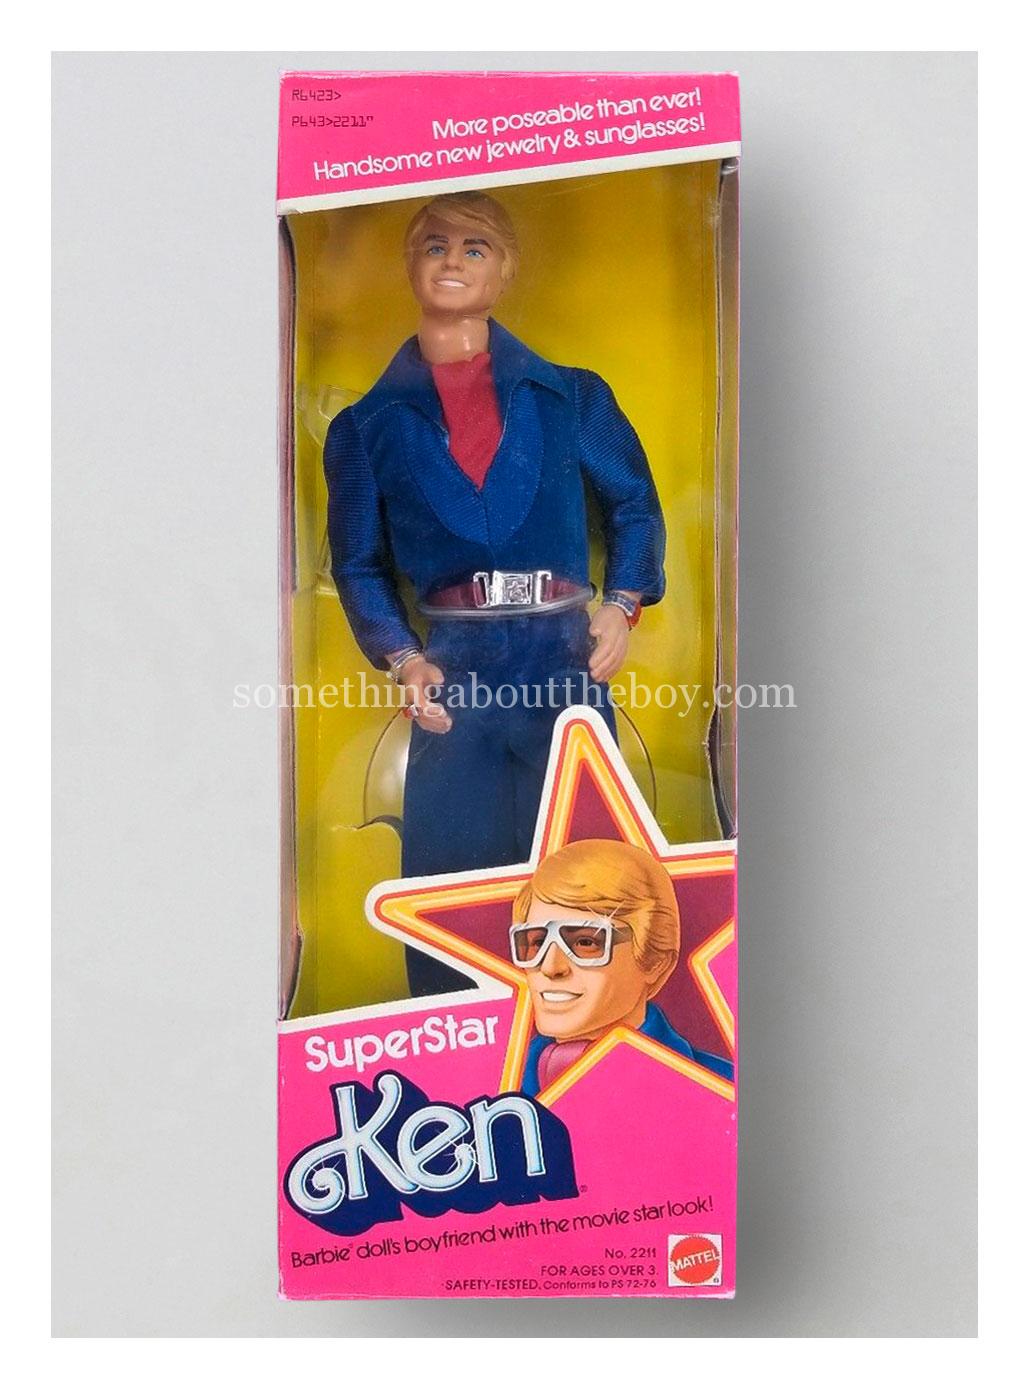 1978 #2211 SuperStar Ken in original packaging